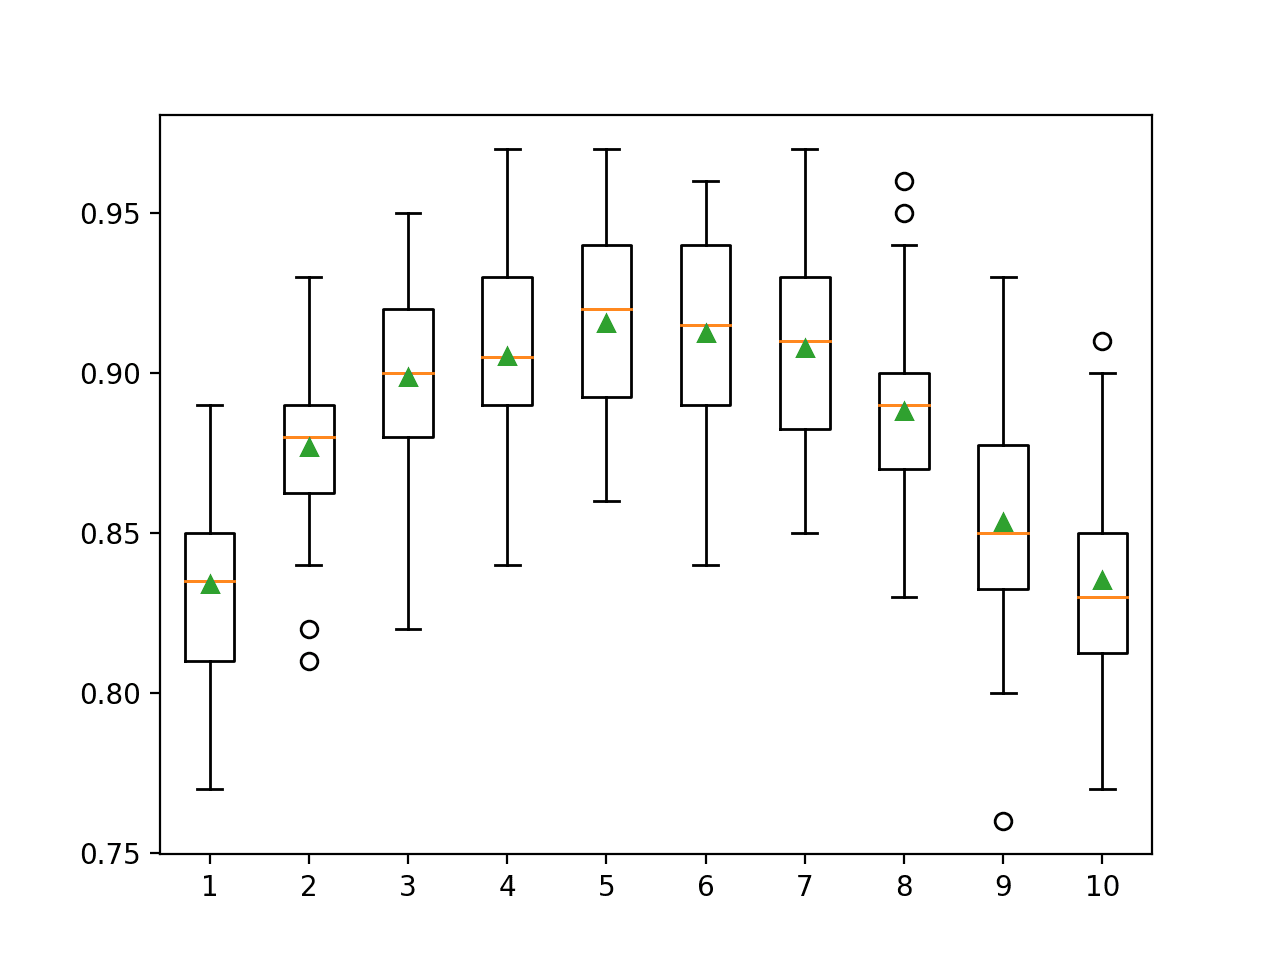 Box Plot of Gradient Boosting Ensemble Tree Depth vs. Classification Accuracy